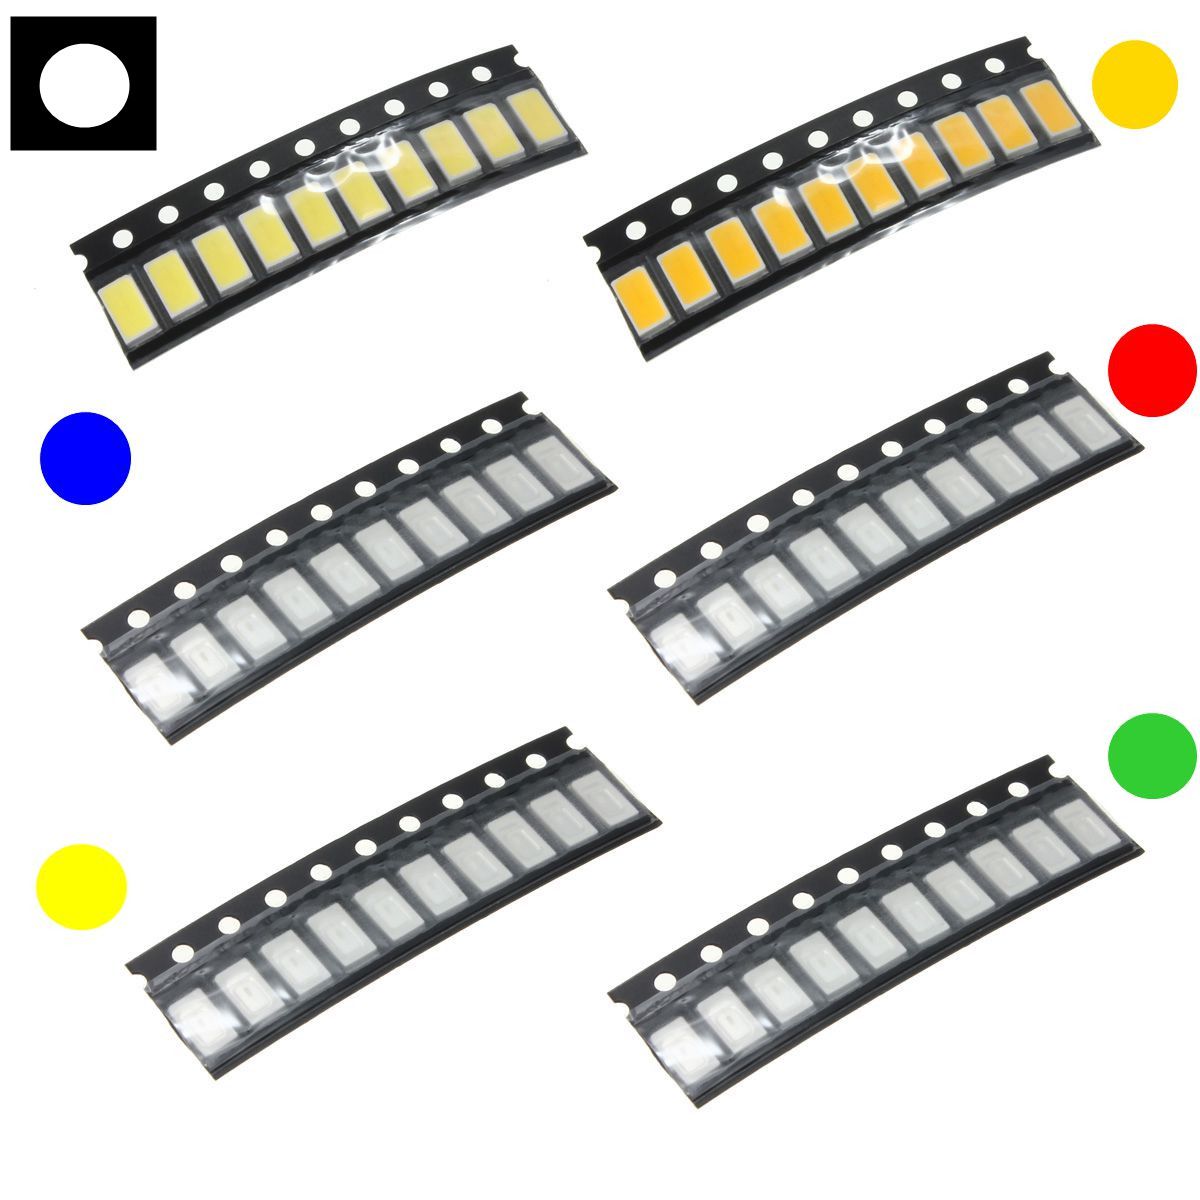 10-pcs-12103528-Colorful-SMD-SMT-LED-Light-Lamp-Beads-For-Strip-Lights-979348